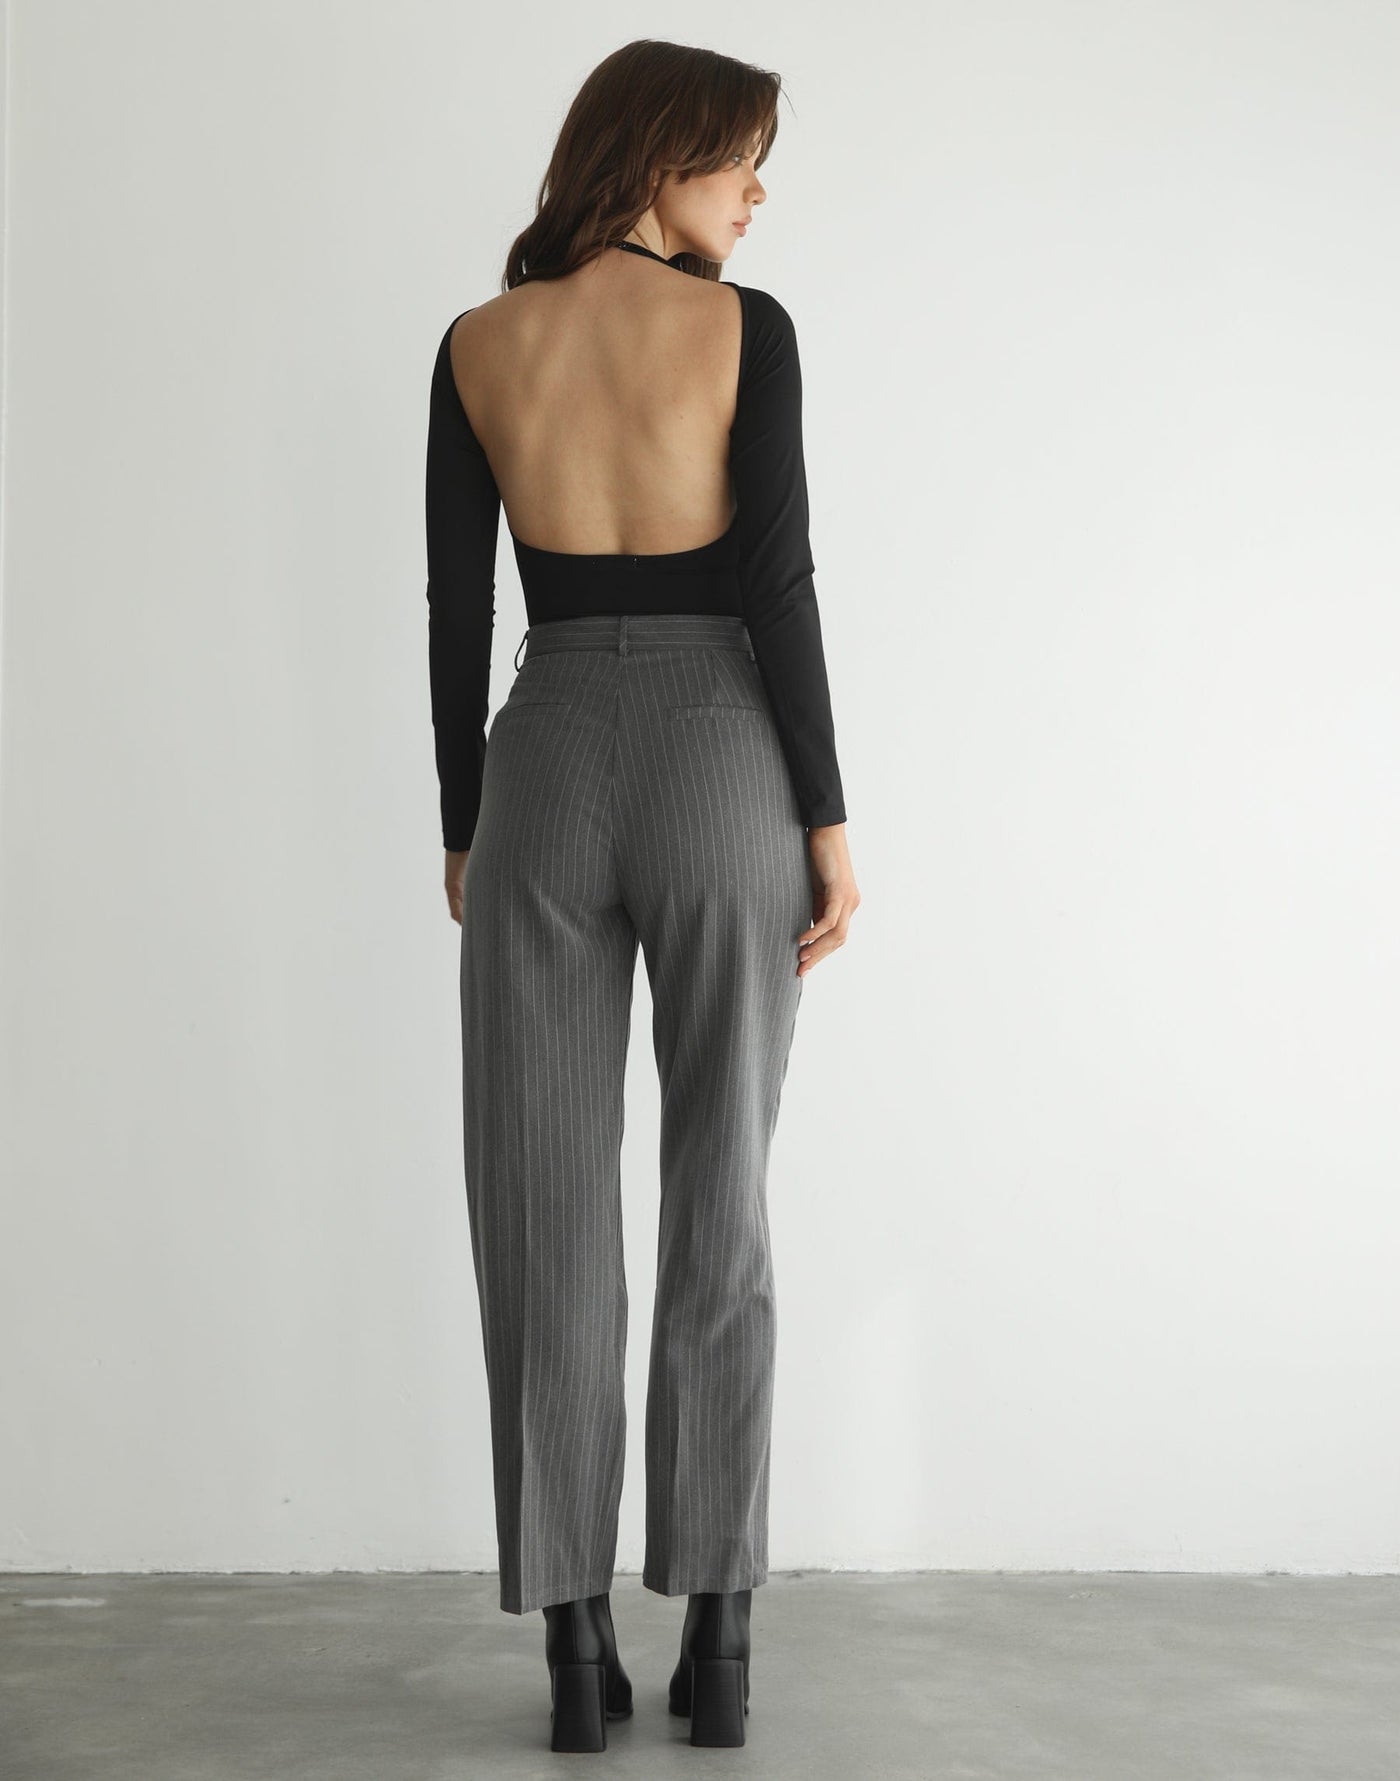 Nicky Bodysuit (Black) - Long Sleeve Backless Bodysuit - Women's Top - Charcoal Clothing